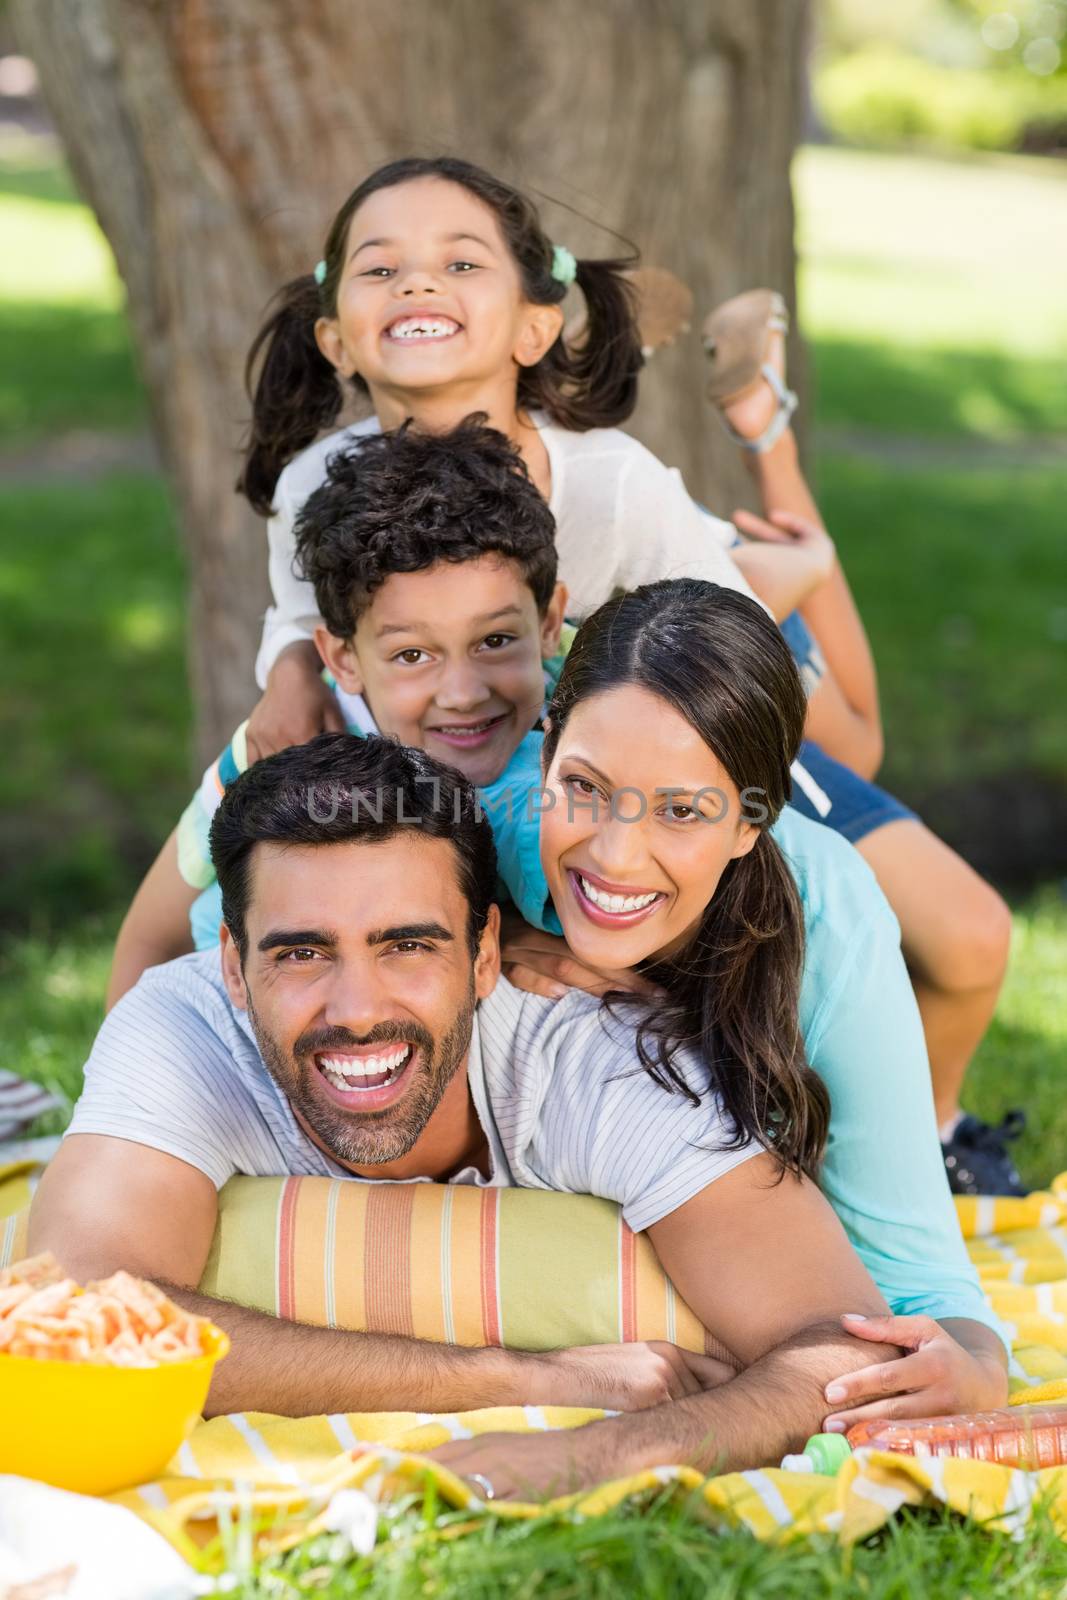 Happy family enjoying together in park by Wavebreakmedia